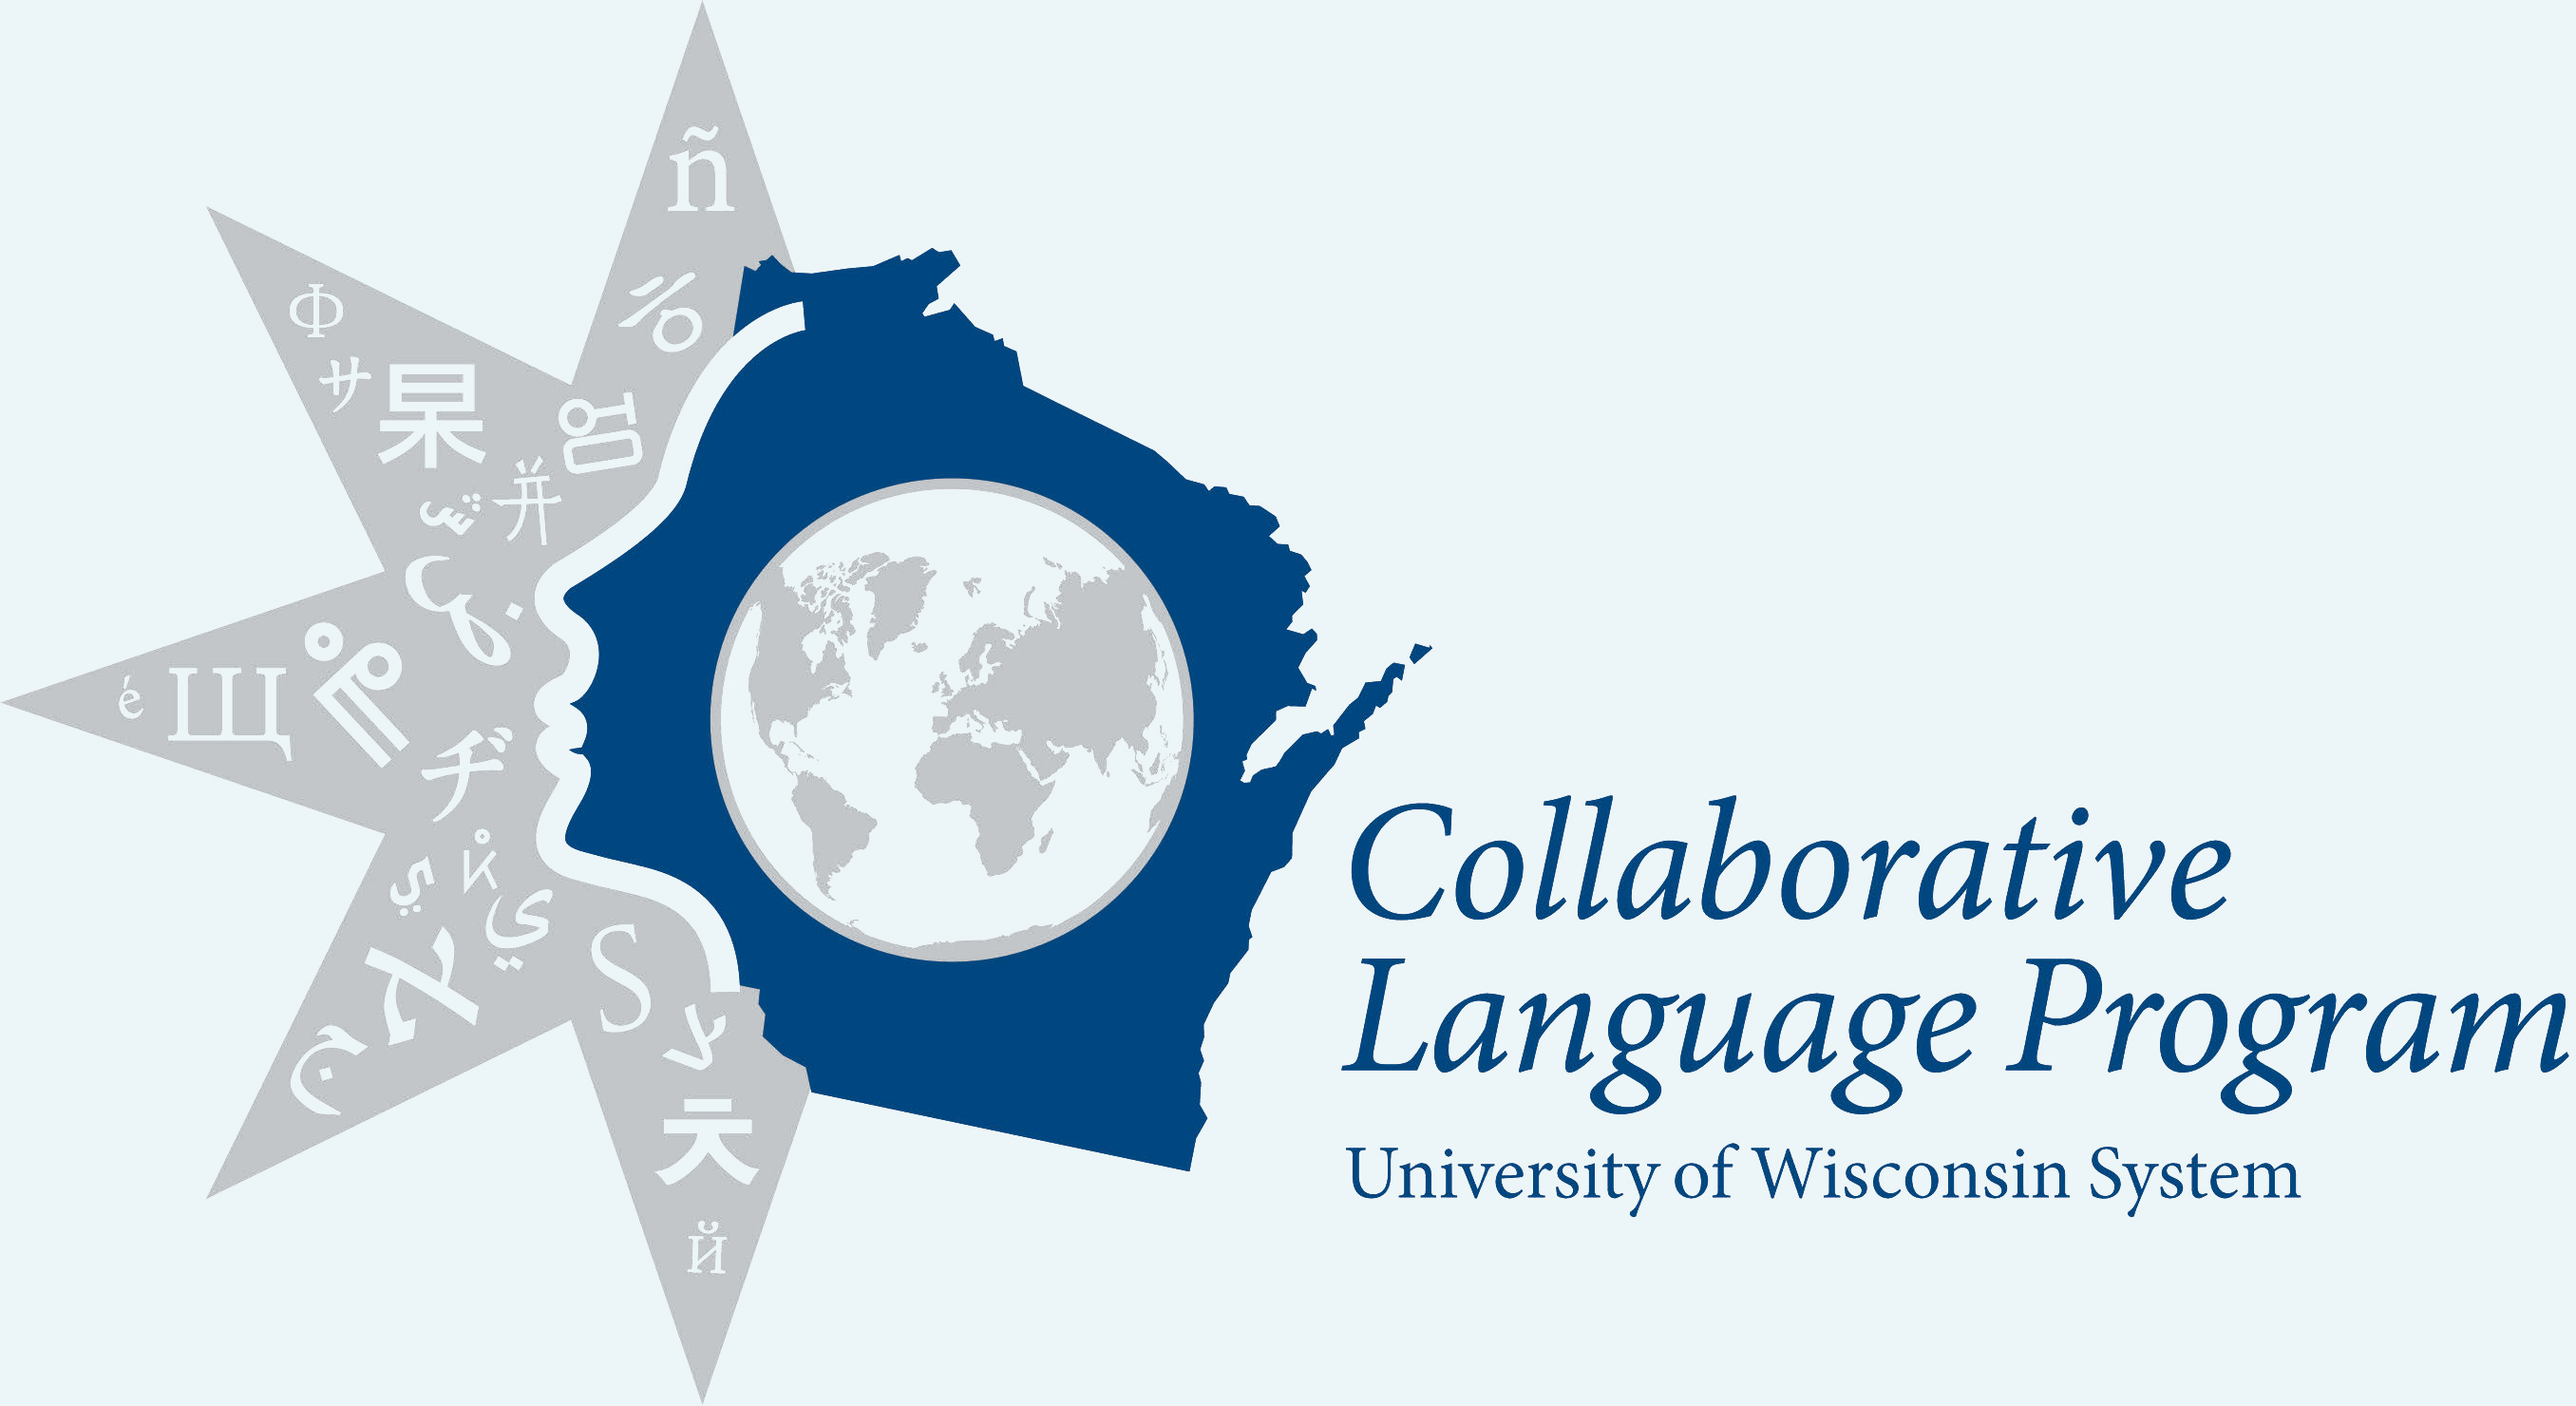 Collaborative Language Program, University of Wisconsin System logo